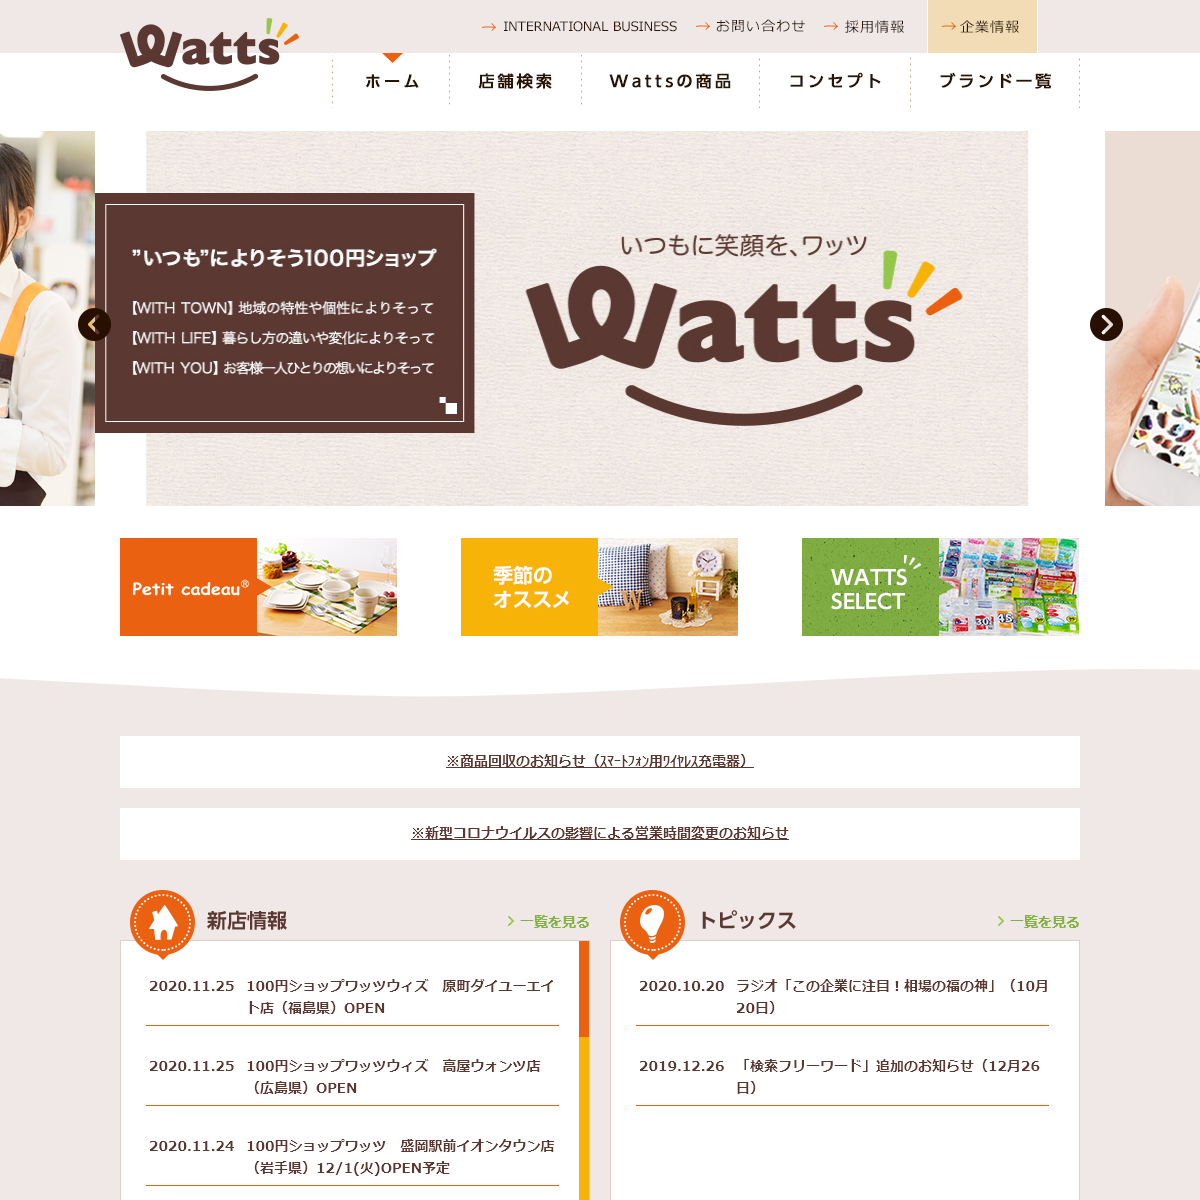 A complete backup of watts-jp.com